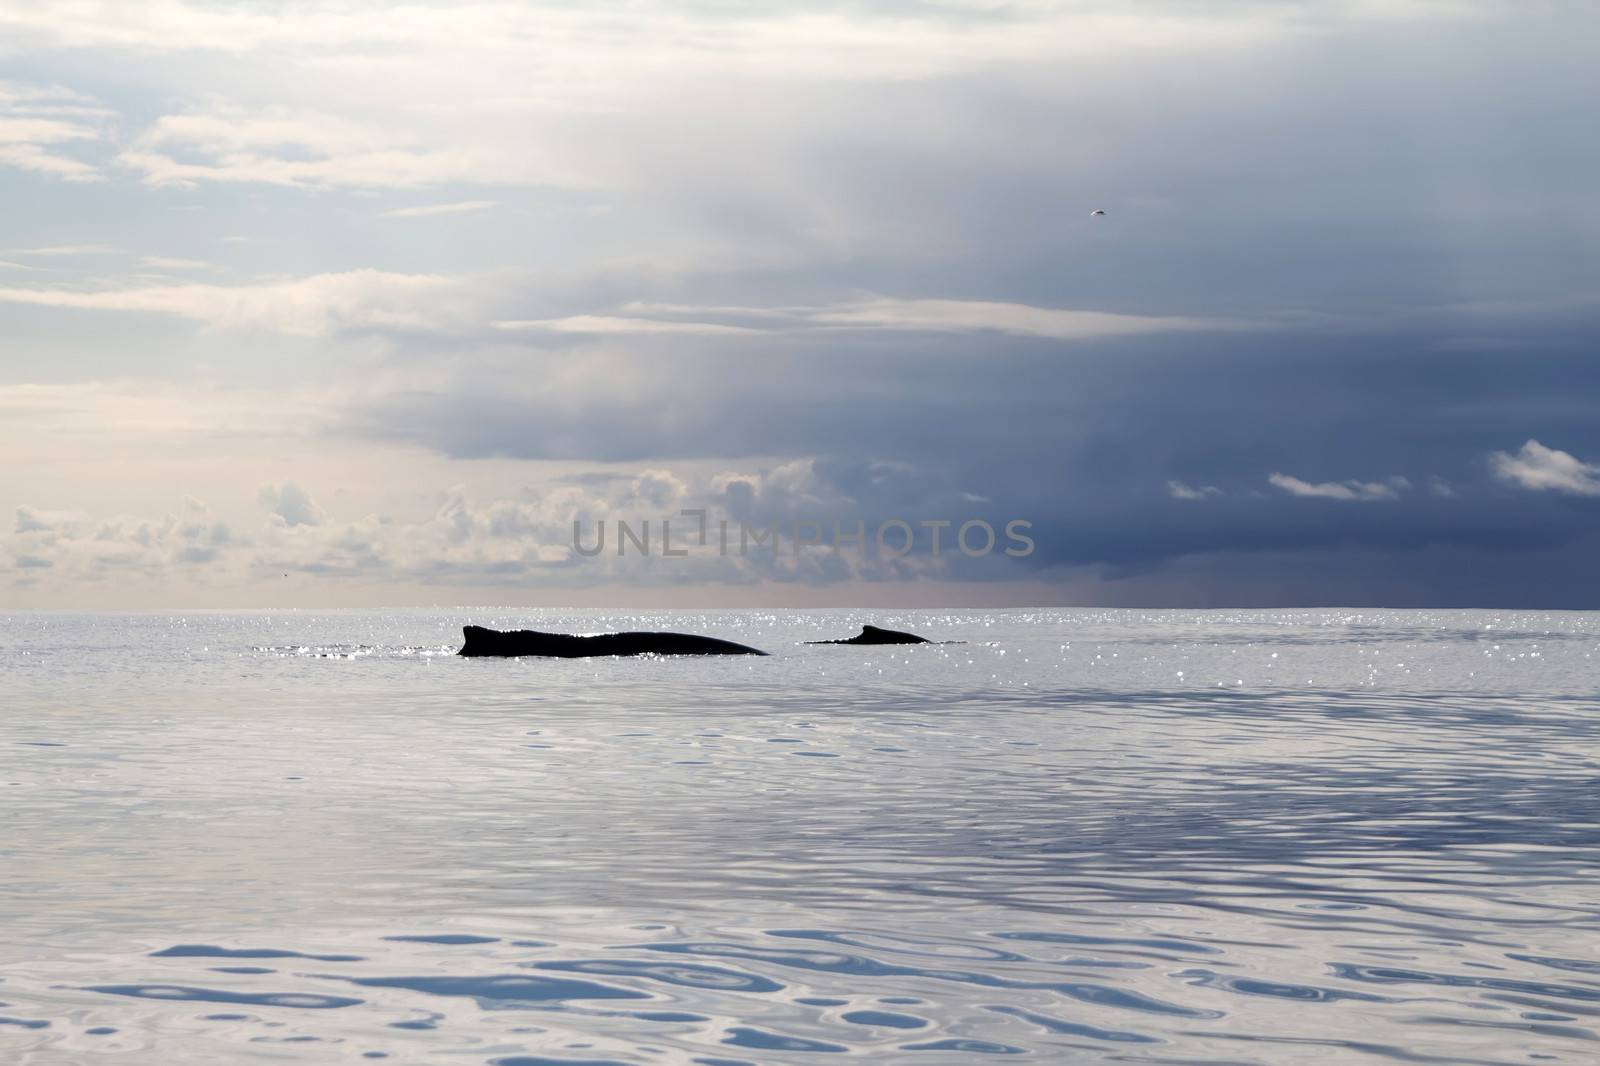 humpback whale (lat. Megaptera novaeangliae) Commander Islands. Russia